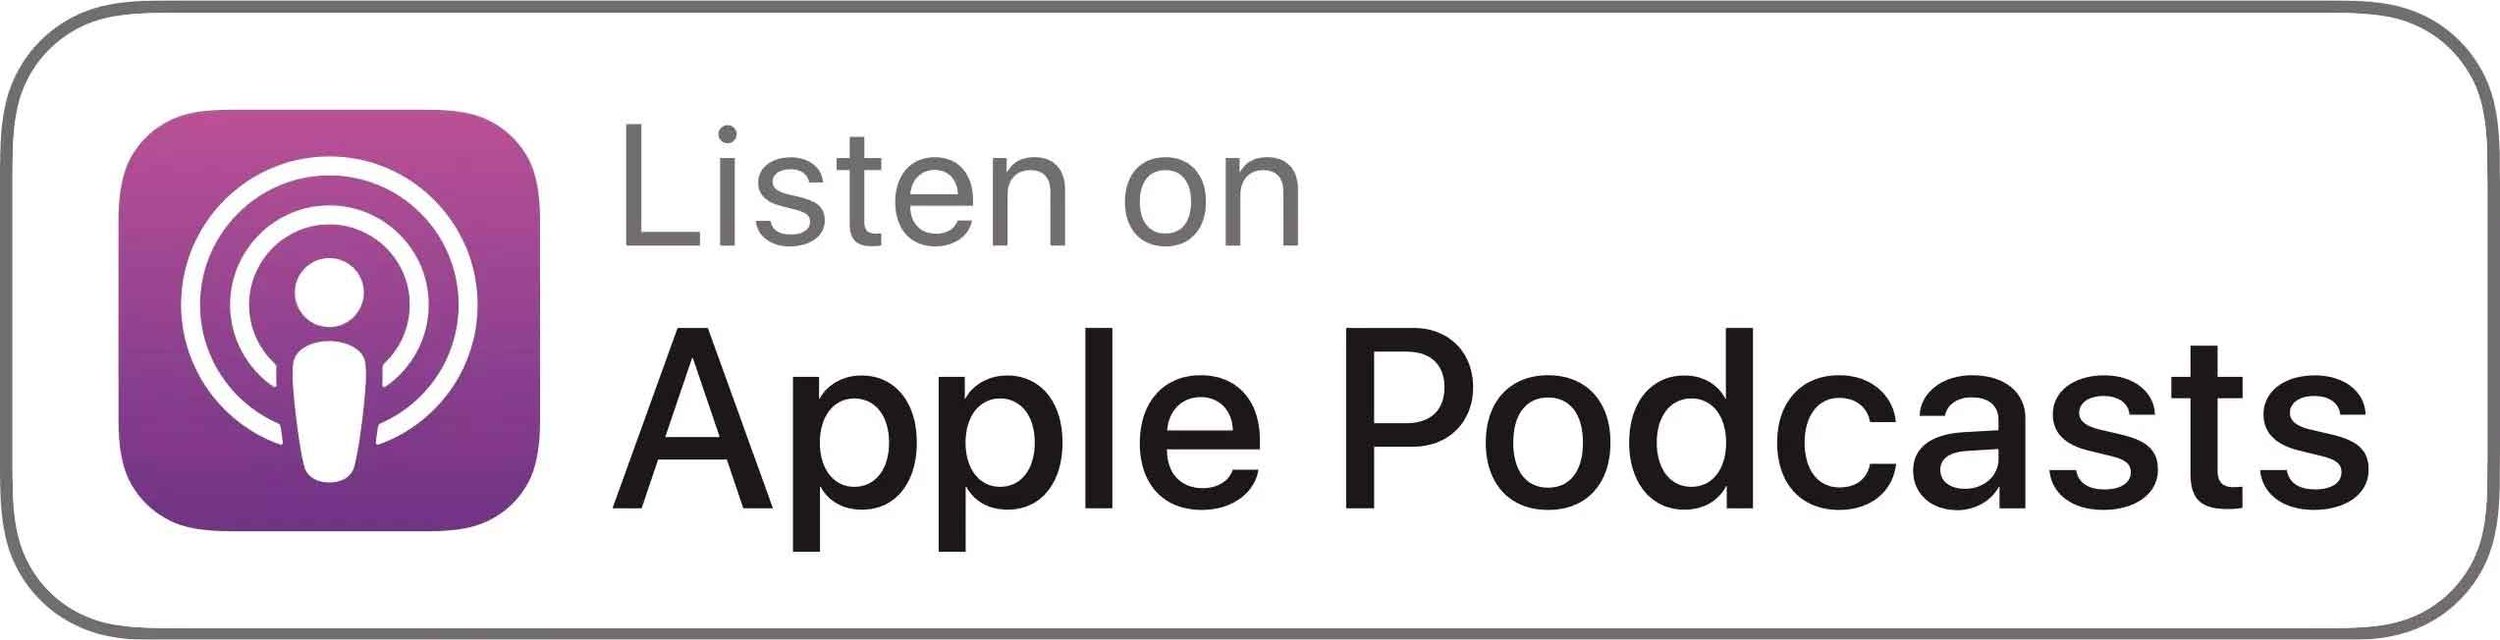 apple-podcast-logo.jpeg